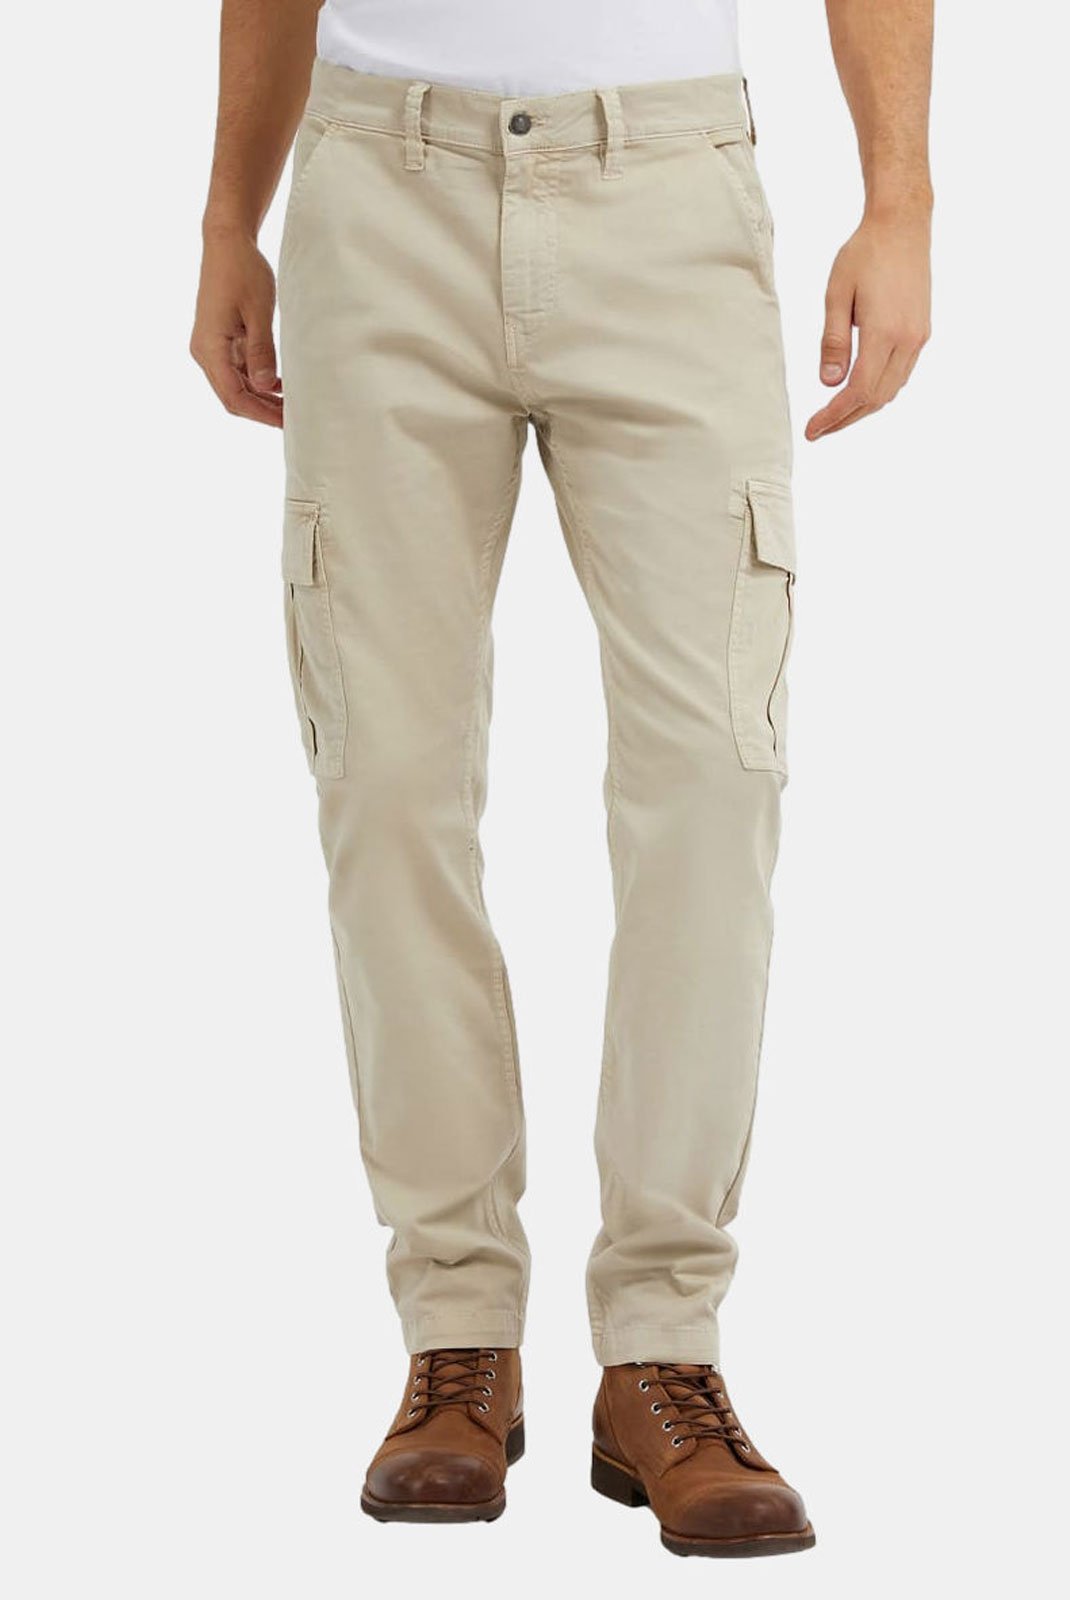 Pantalons sport/streetwear  Guess jeans M3YB17 WFIO3 G1V7 RESORT SAND 